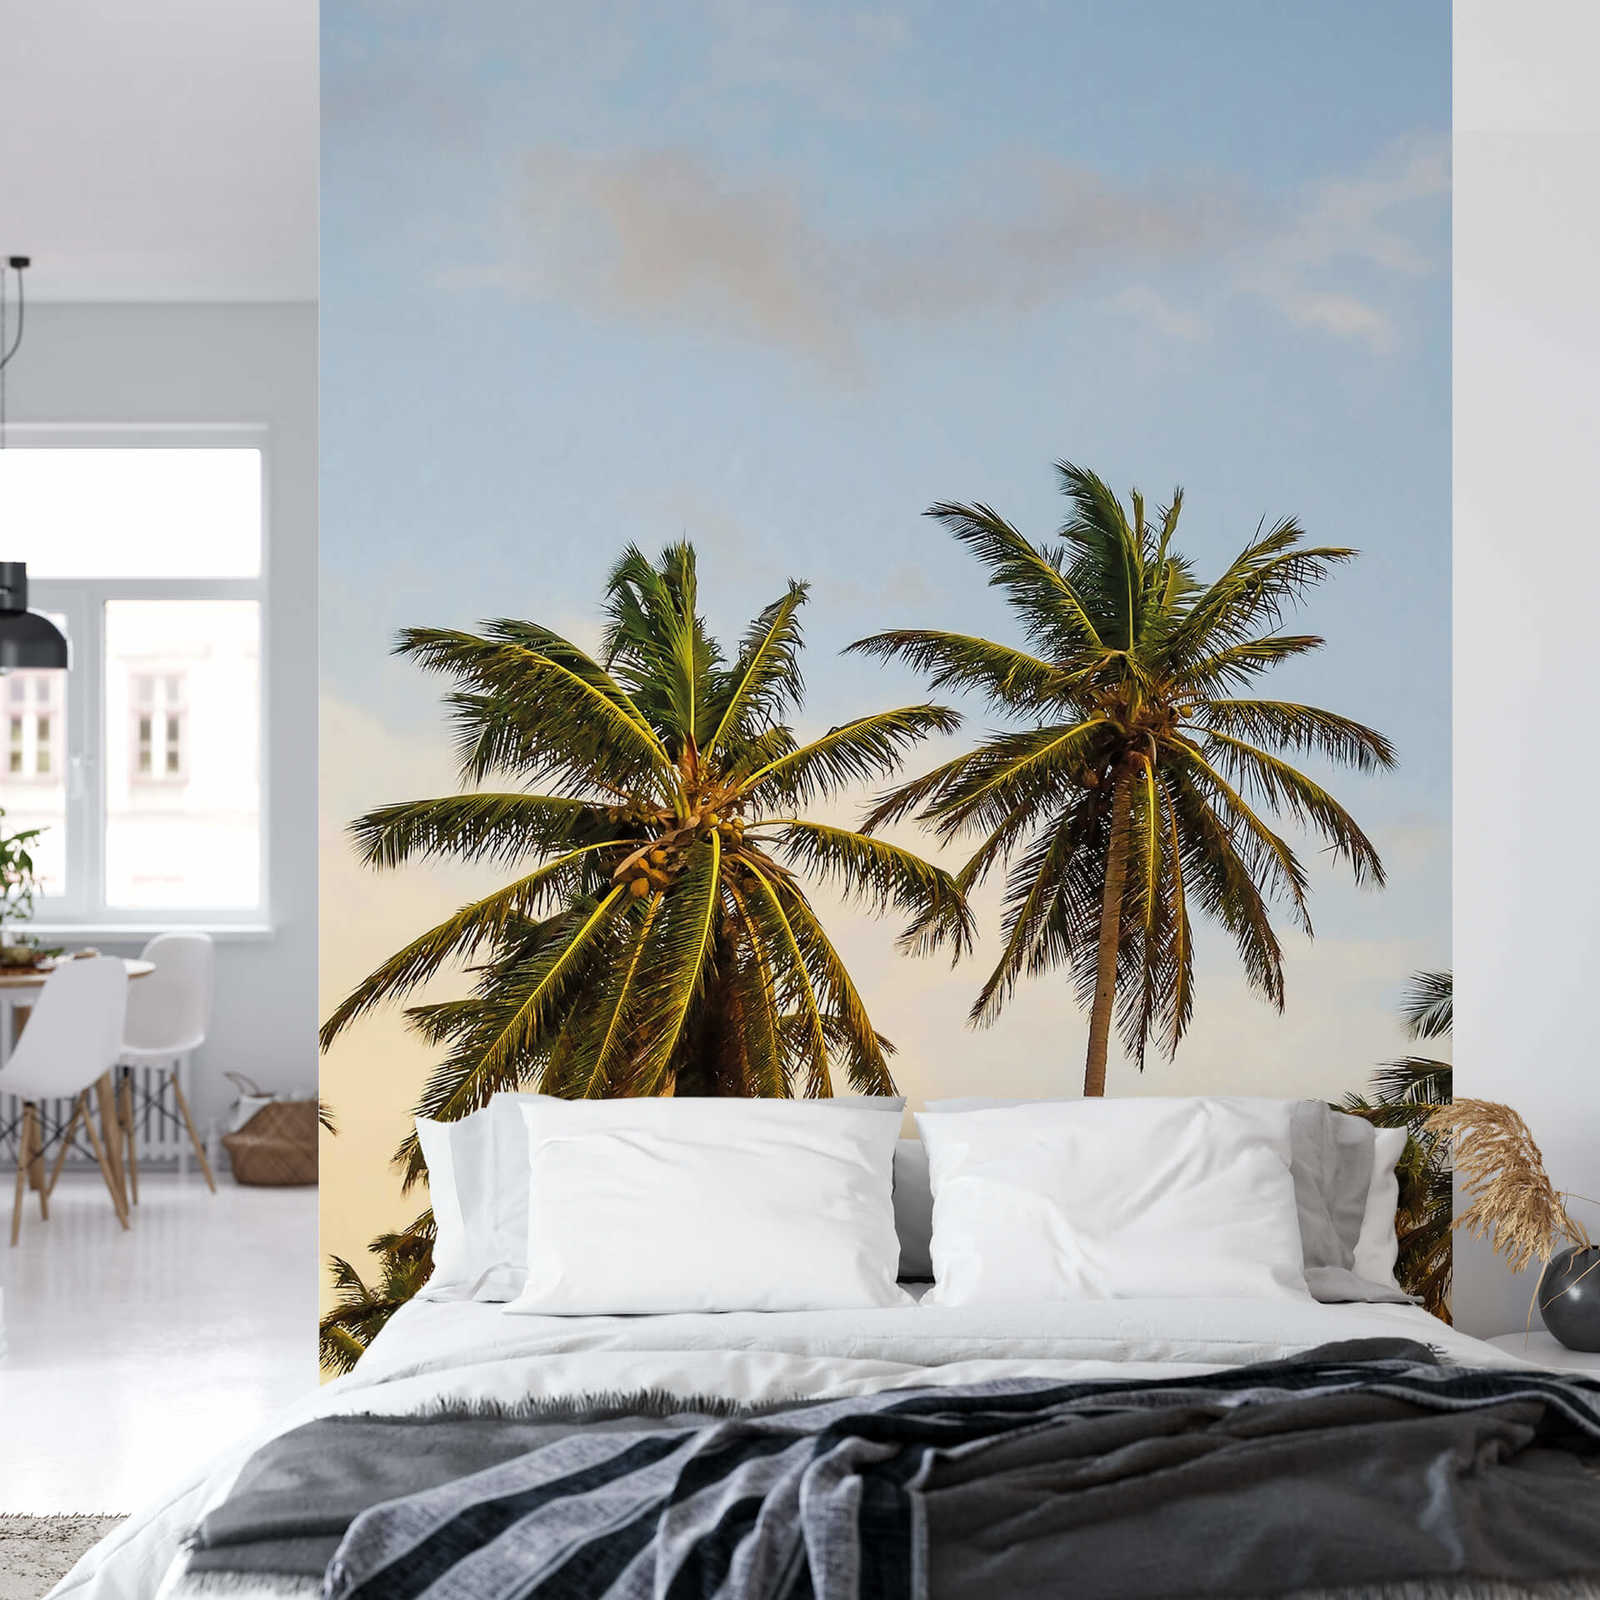             Photo wallpaper narrow palm trees on Ibiza
        